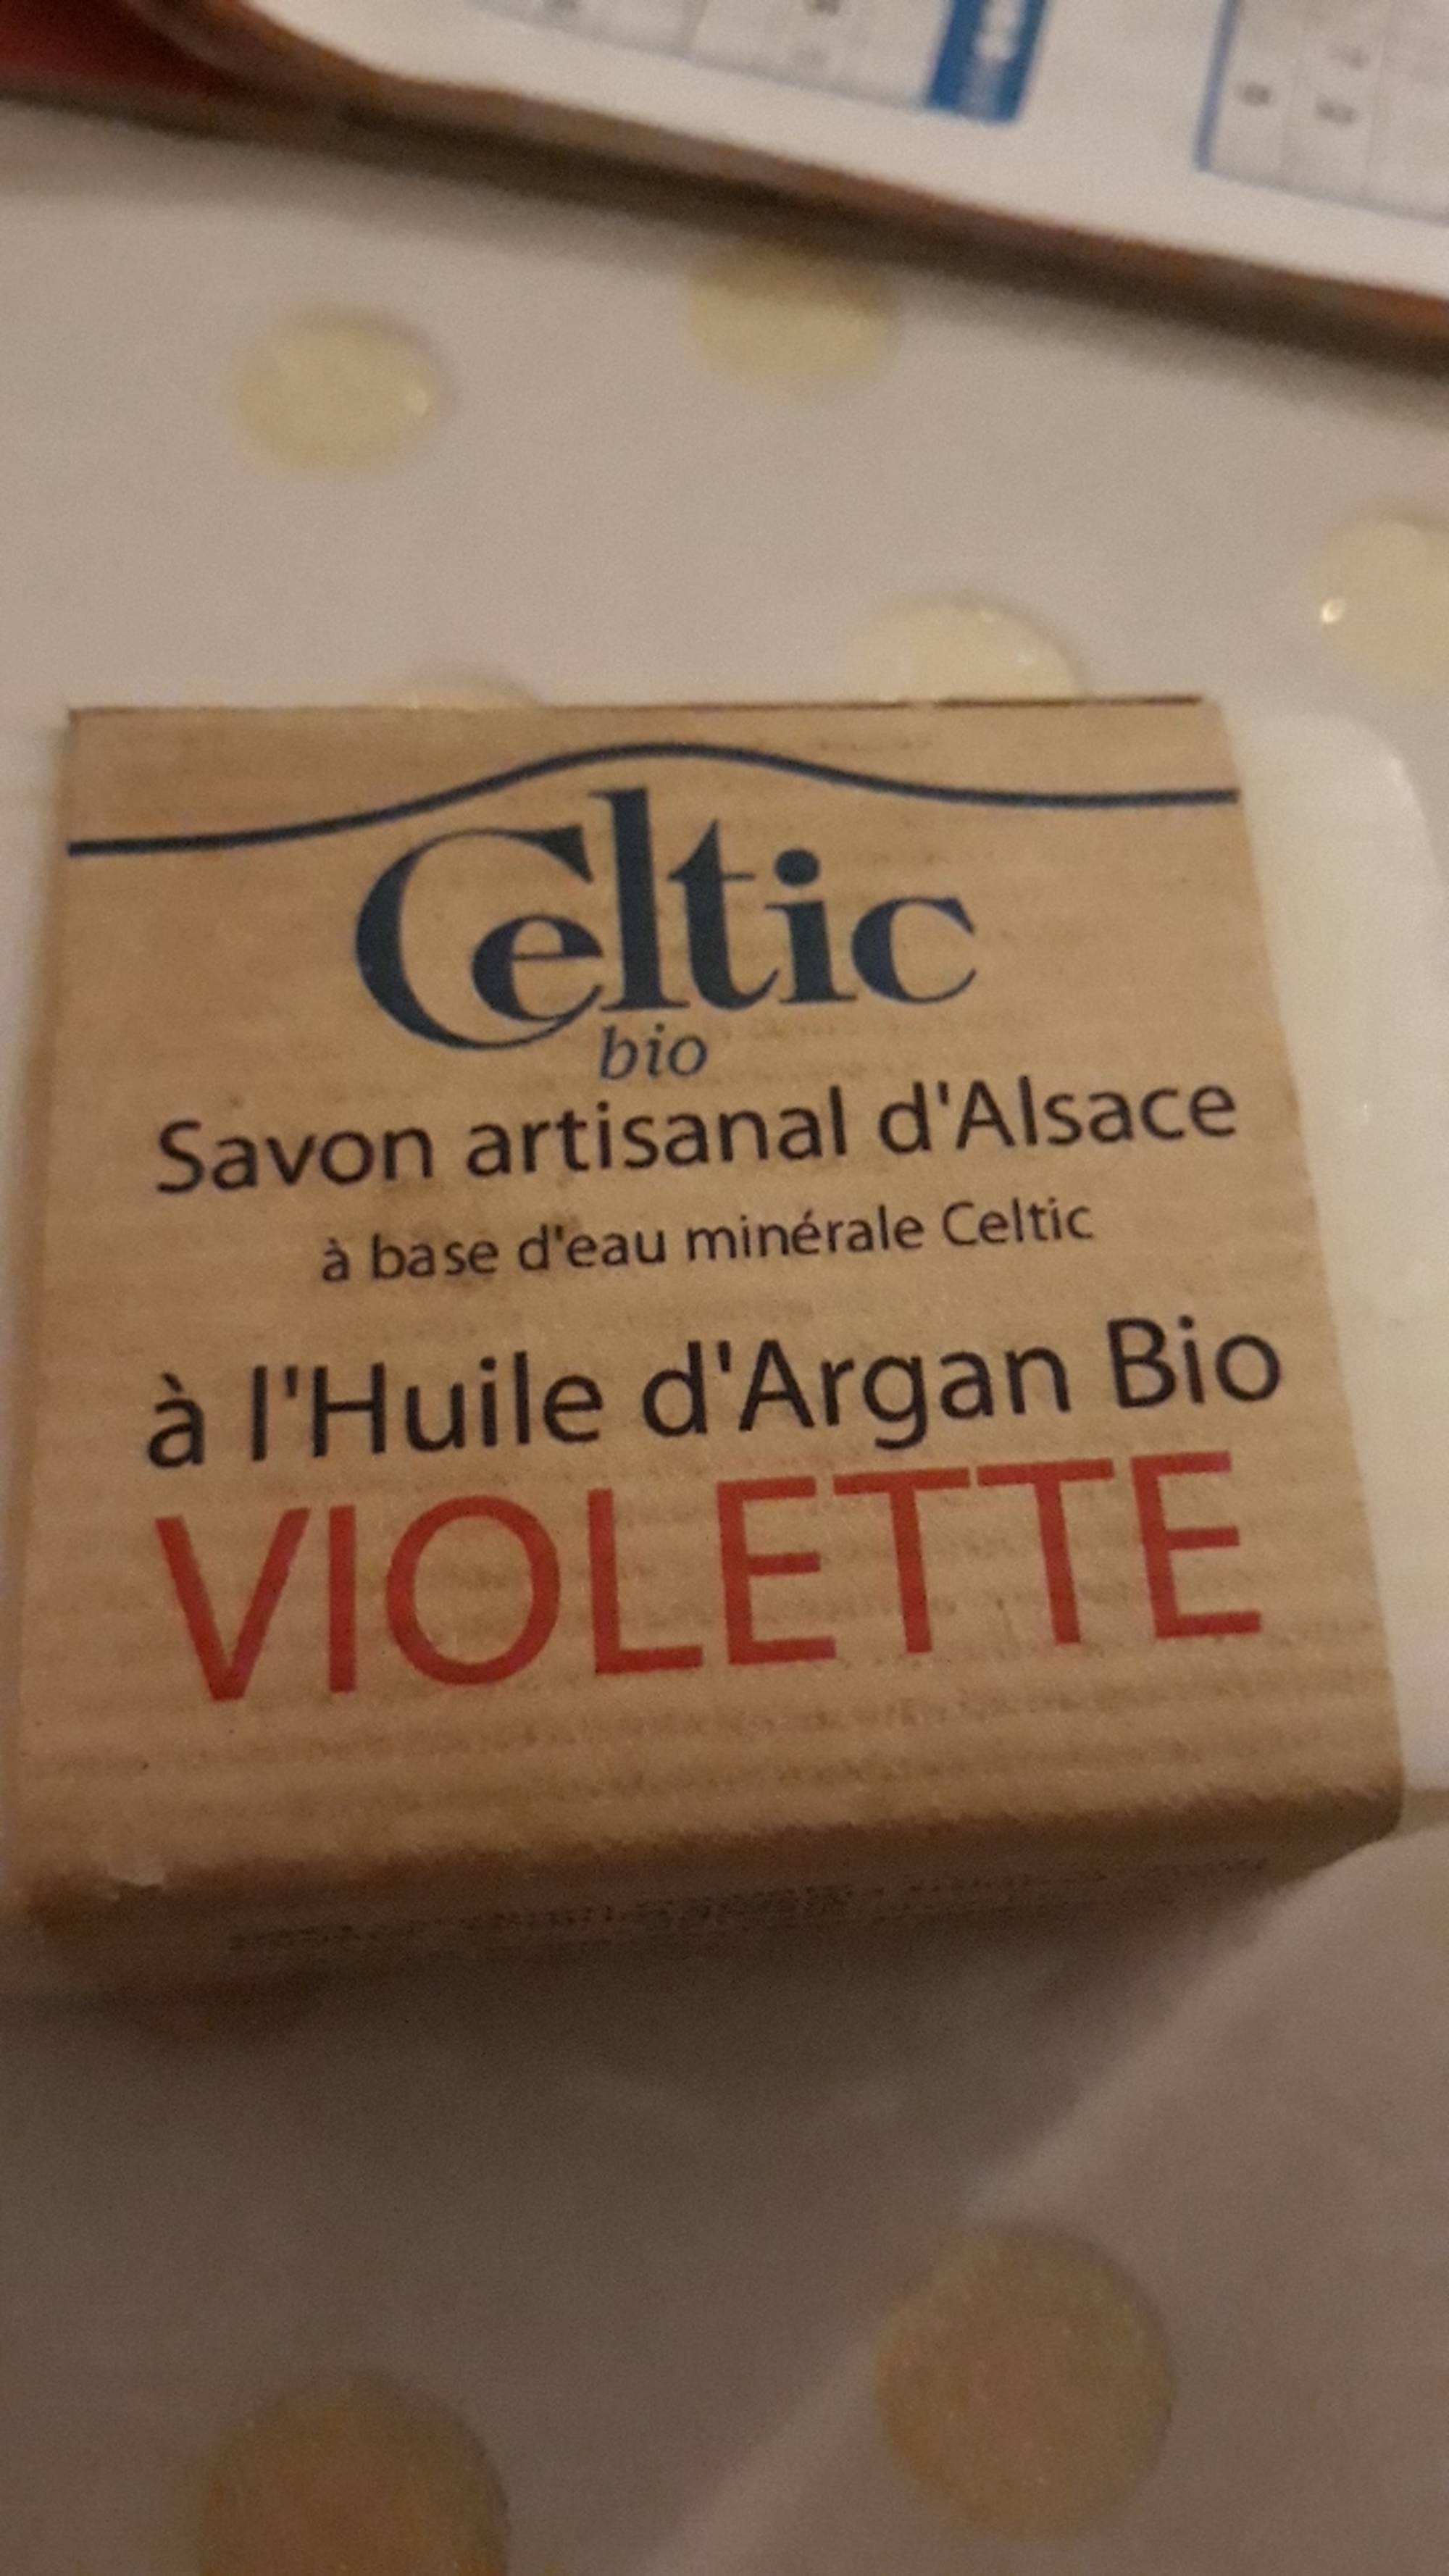 CELTIC BIO - Violette - Savon artisanal d'Alsace bio